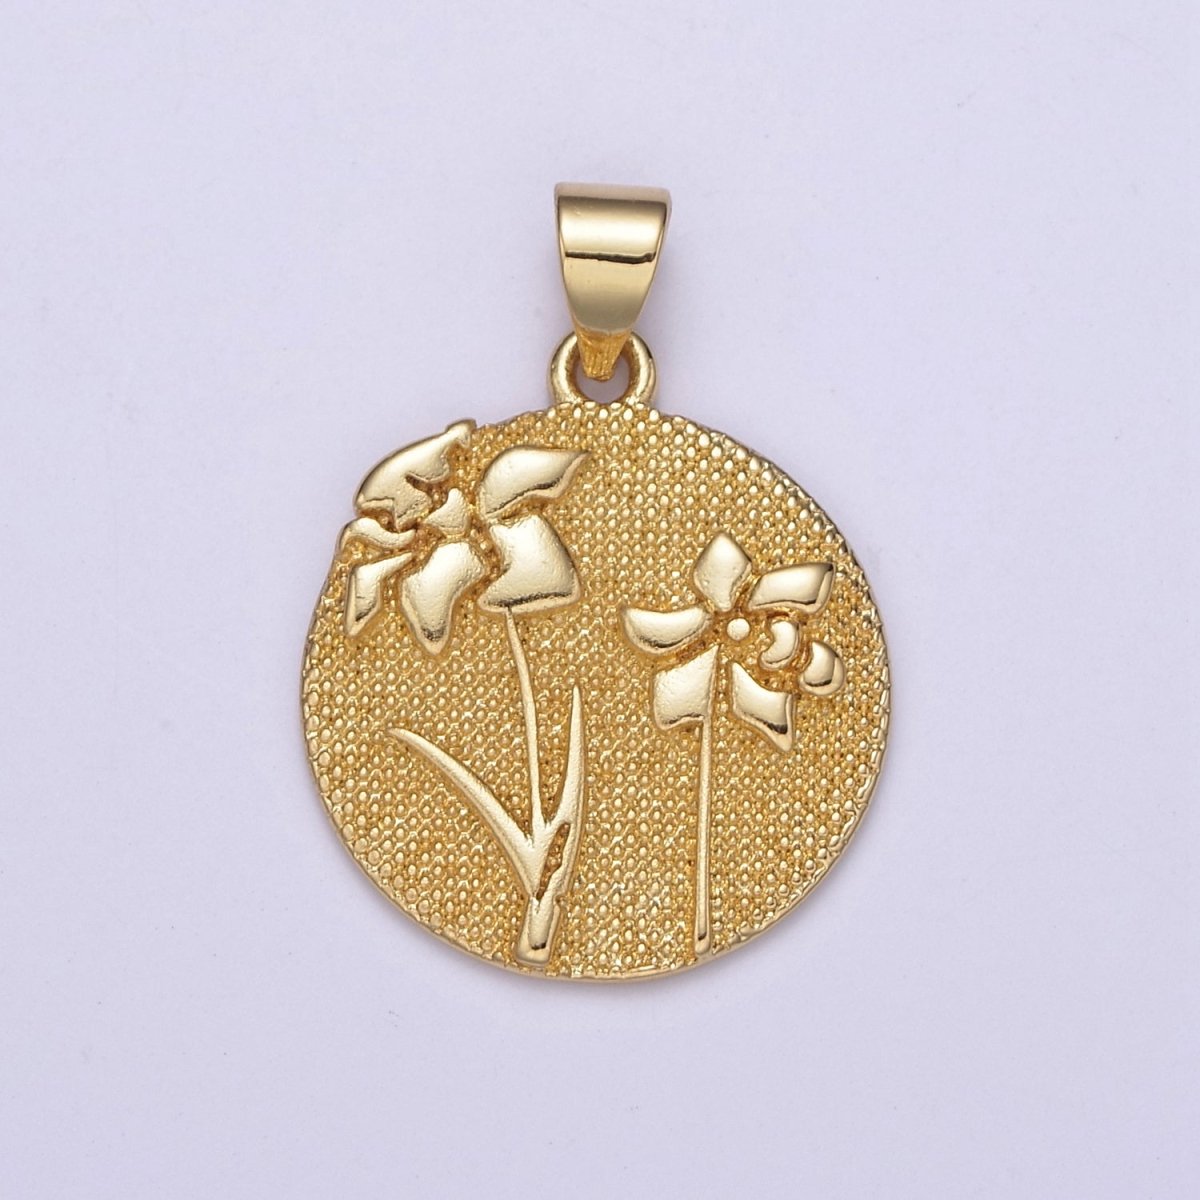 Wild Flower Collection Gold Rose Flower, Cotton Blossom, Sun Flower Dandelion Charm Medallion for Necklace Bracelet Supply H-070 H-079 H-087 H-093 H-095 H-099 - DLUXCA